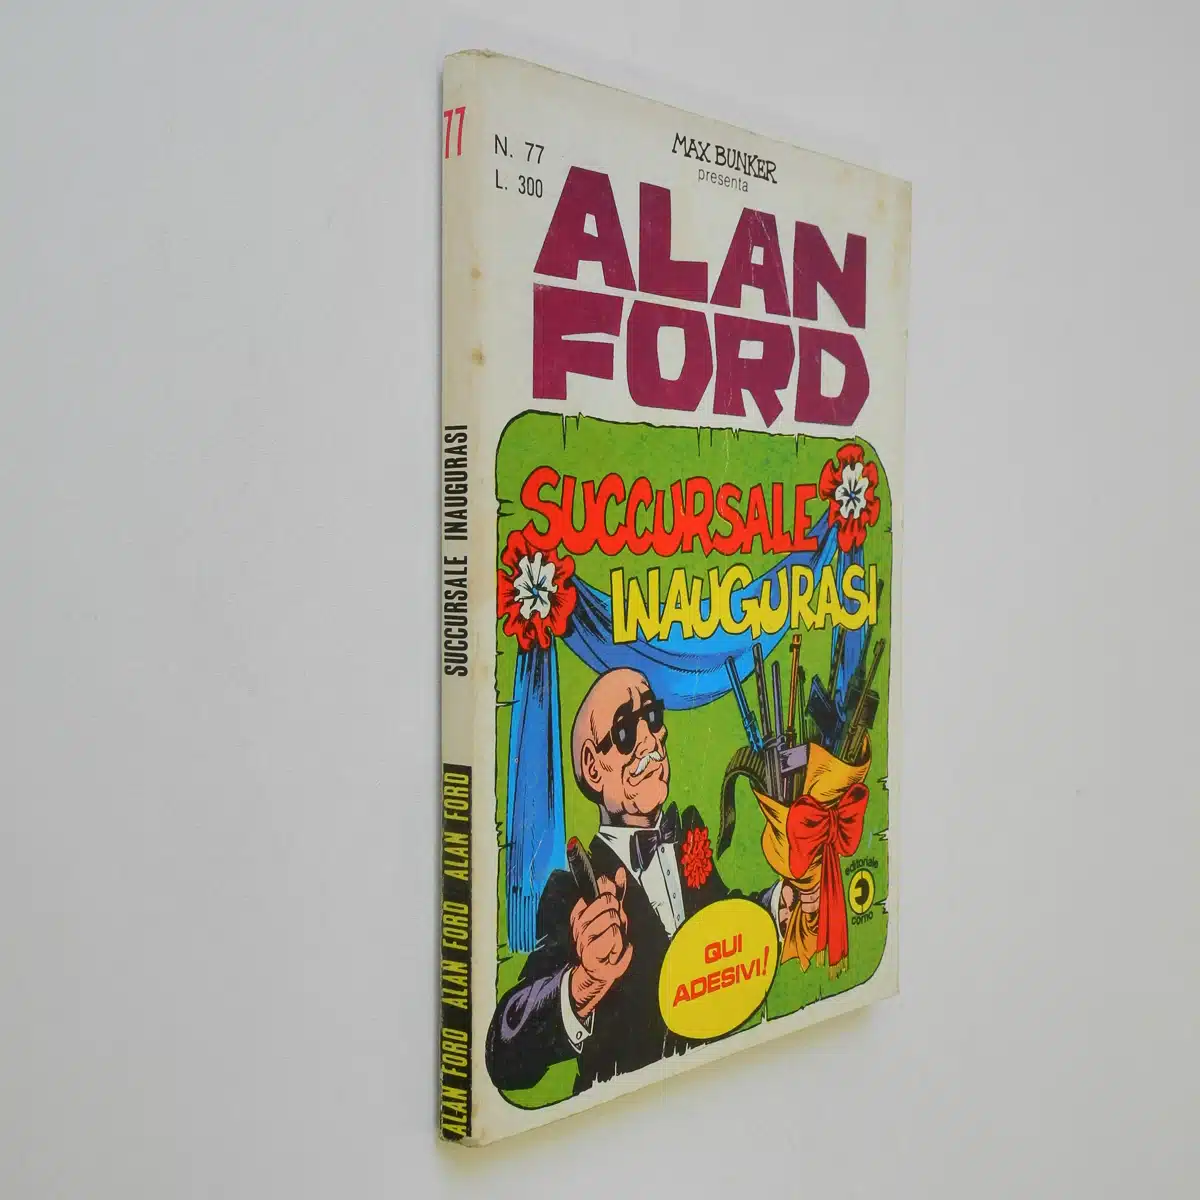 Alan Ford n. 77 con Adesivi Succursale inaugurasi